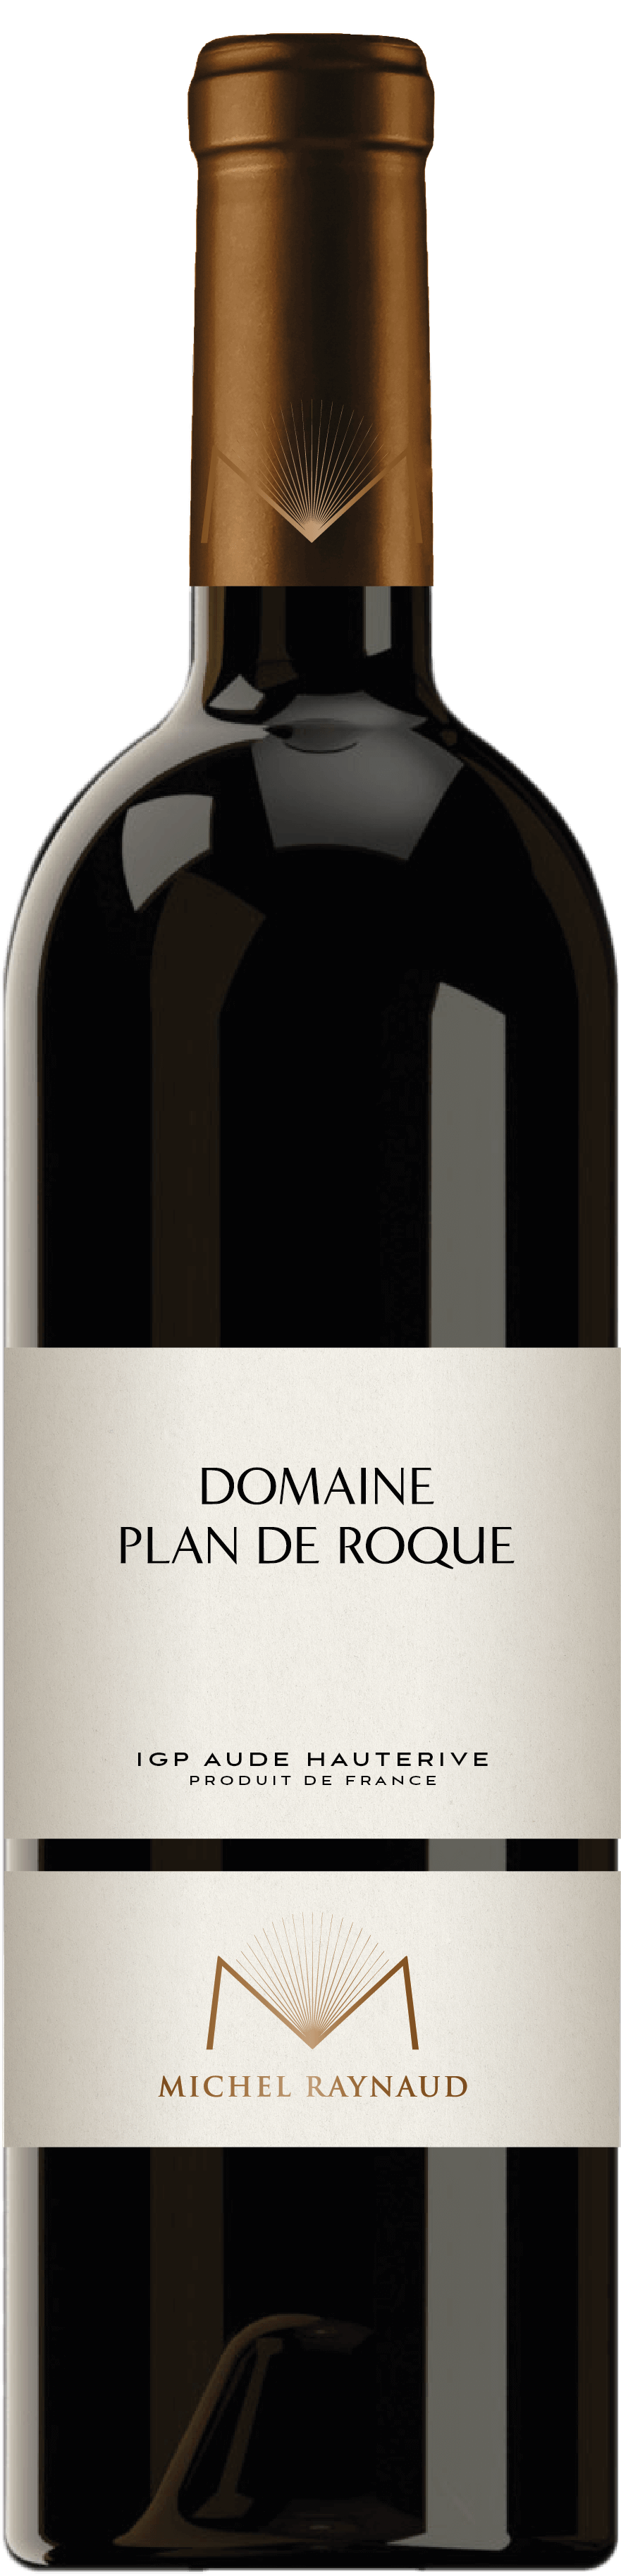 Domaine Plan de Roque – IGP Aude Hauterive - Michel Raynaud